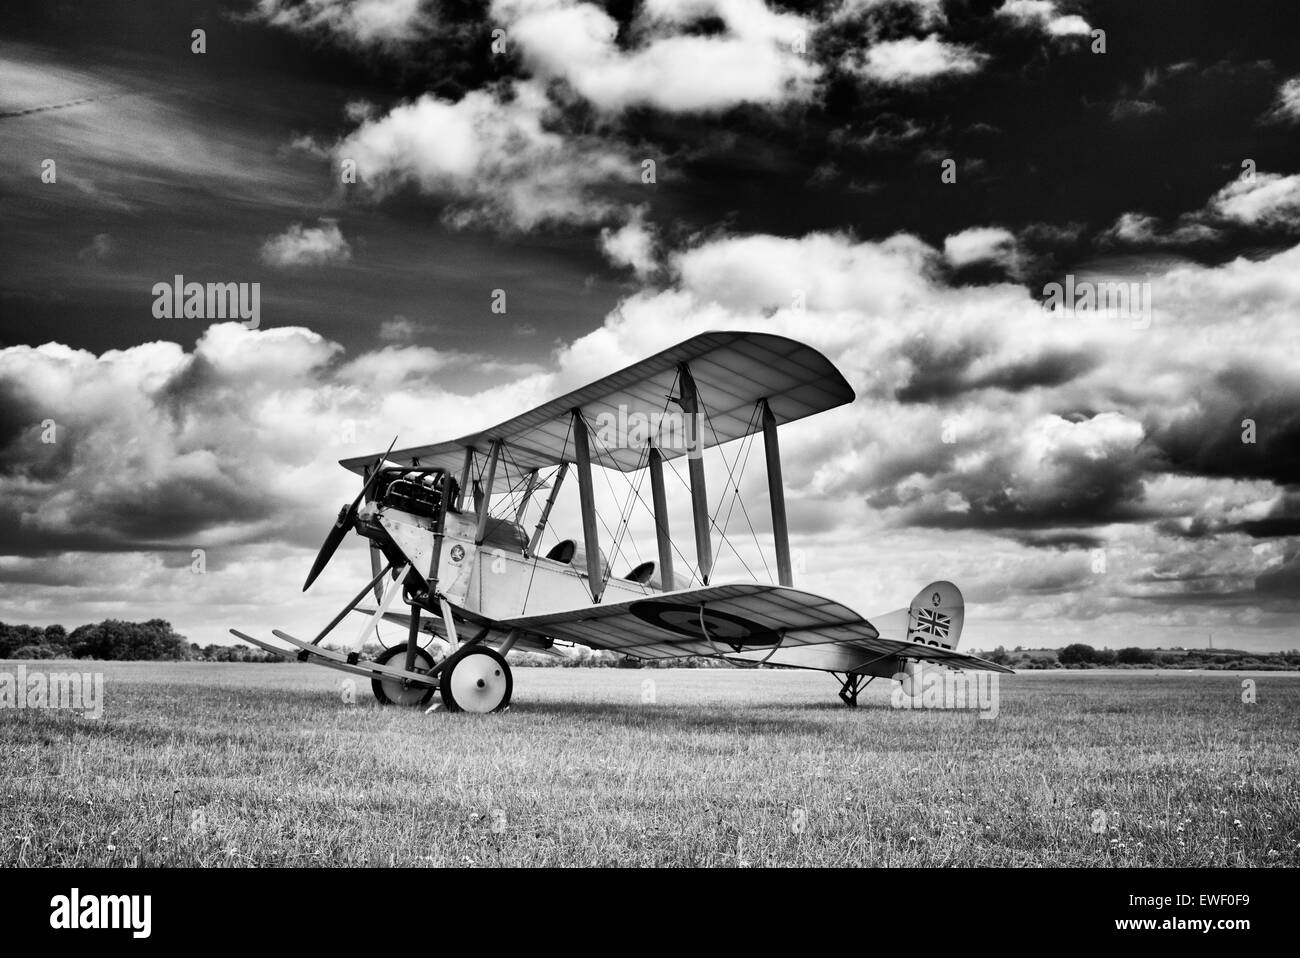 Royal Aircraft Factory SE-2 volant à Bicester biplan festival. L'Oxfordshire, Angleterre. Monochrome Banque D'Images